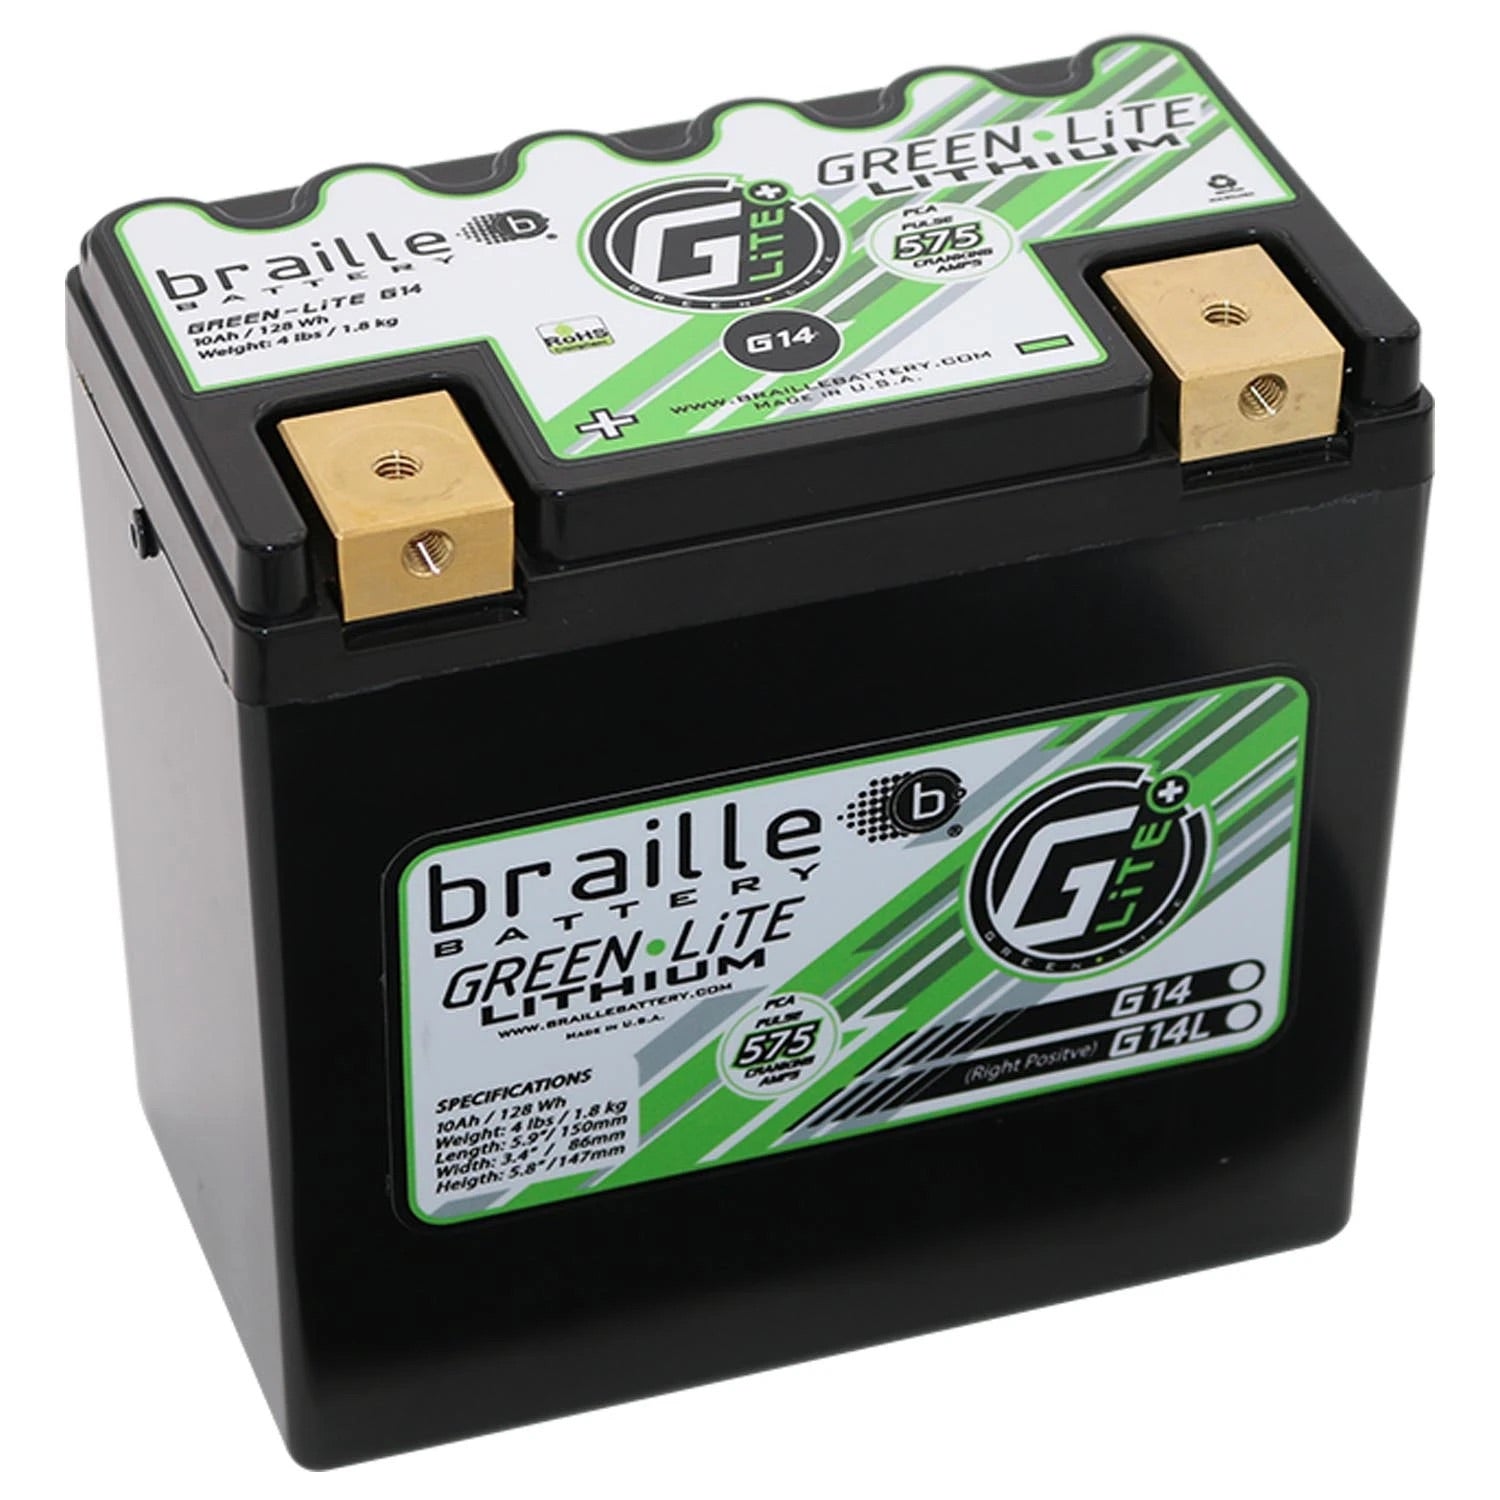 G14 - GreenLite Powersports Lithium Battery